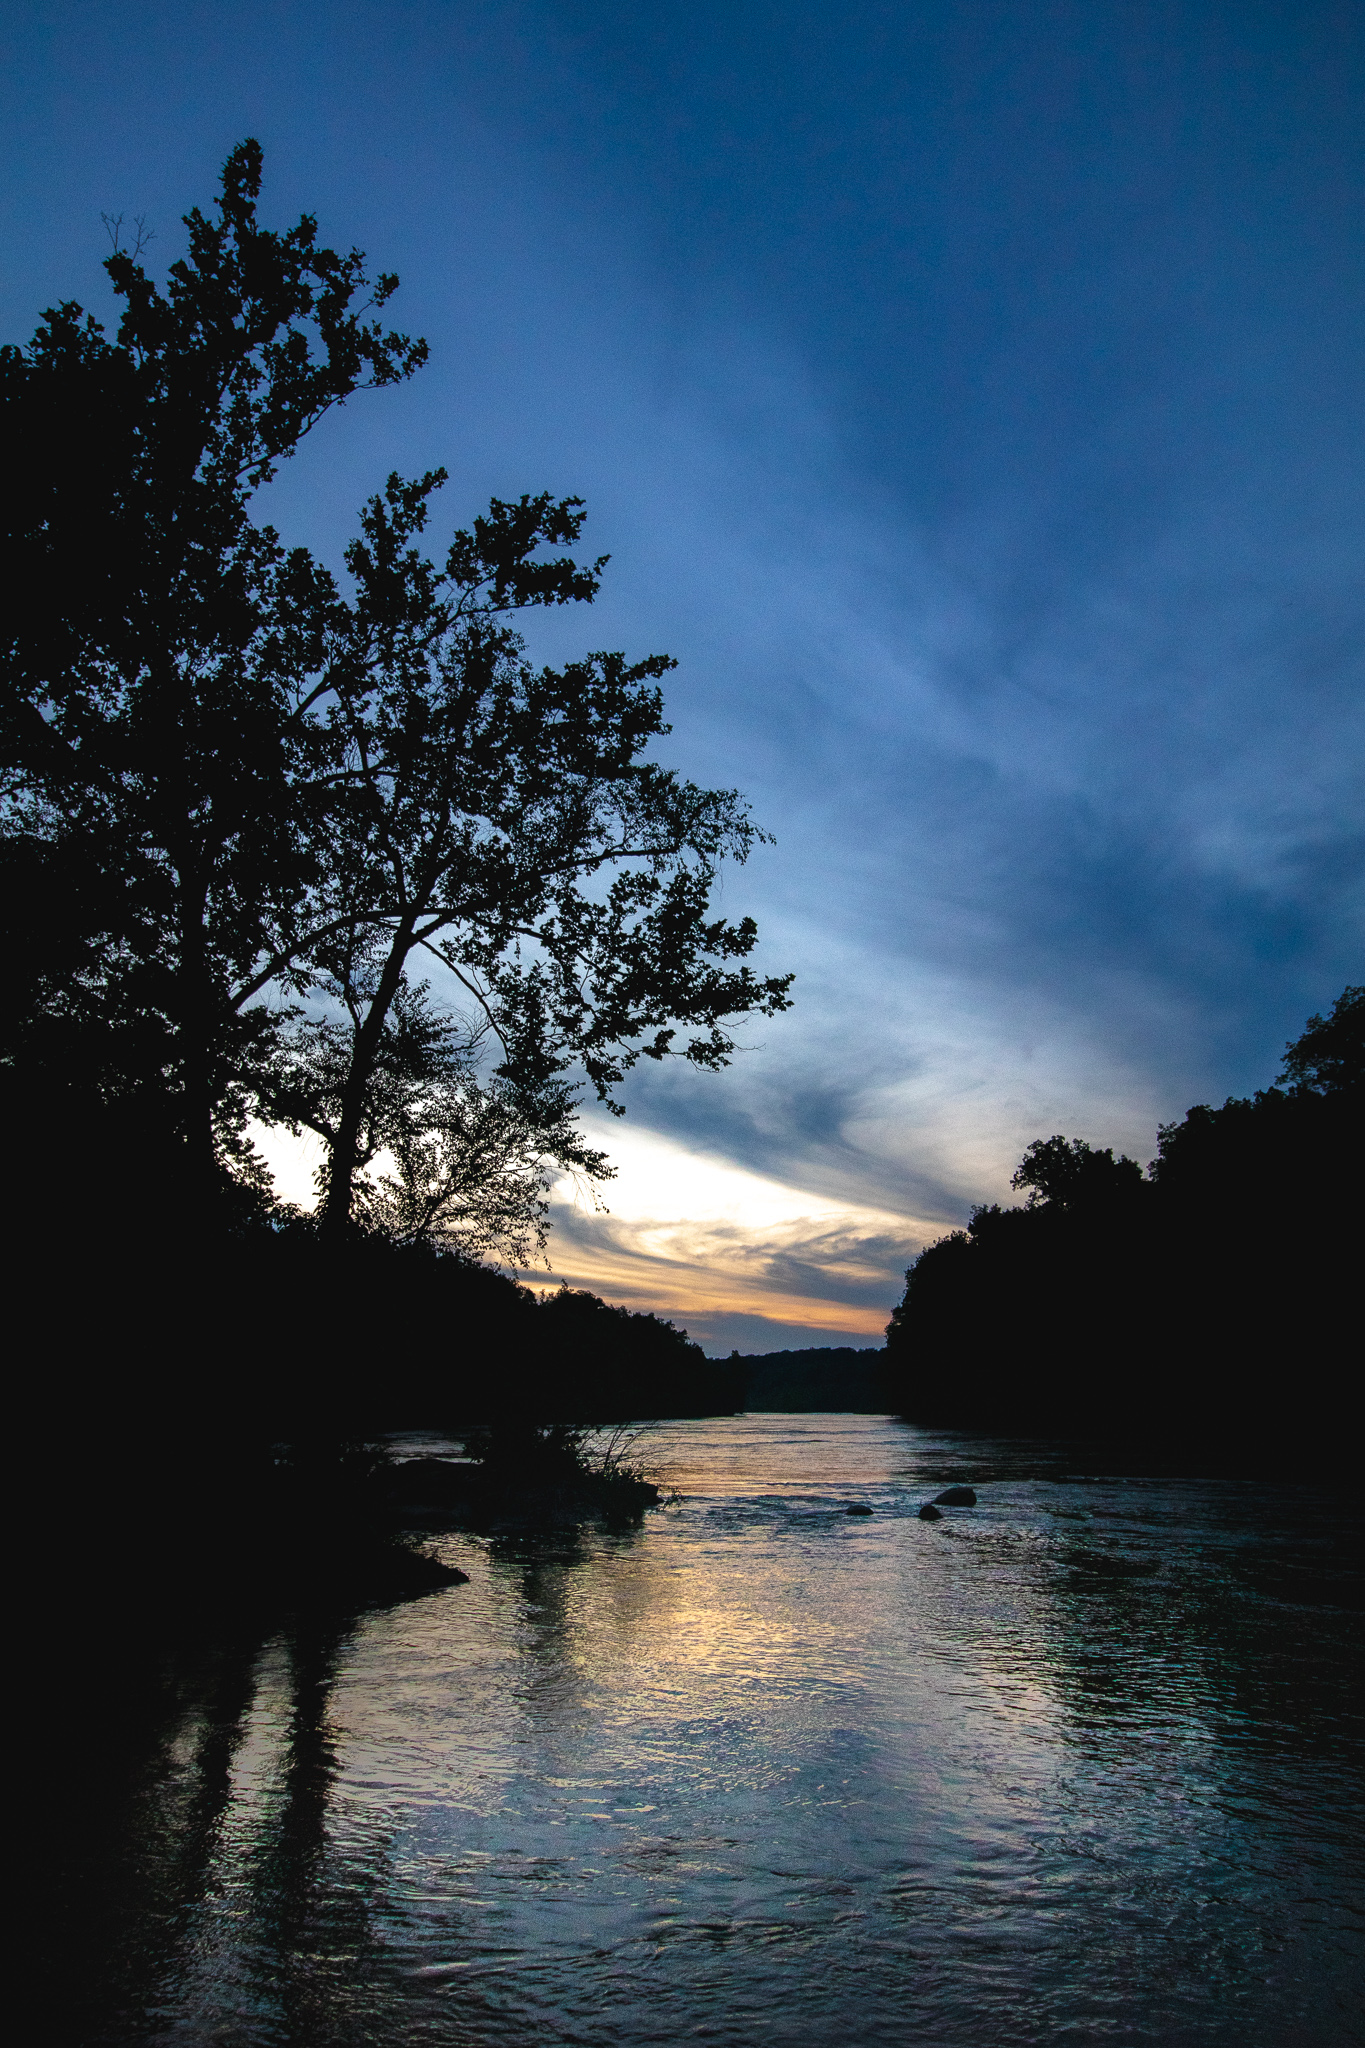 Rappahannock River at dusk. Kate Guy Photography